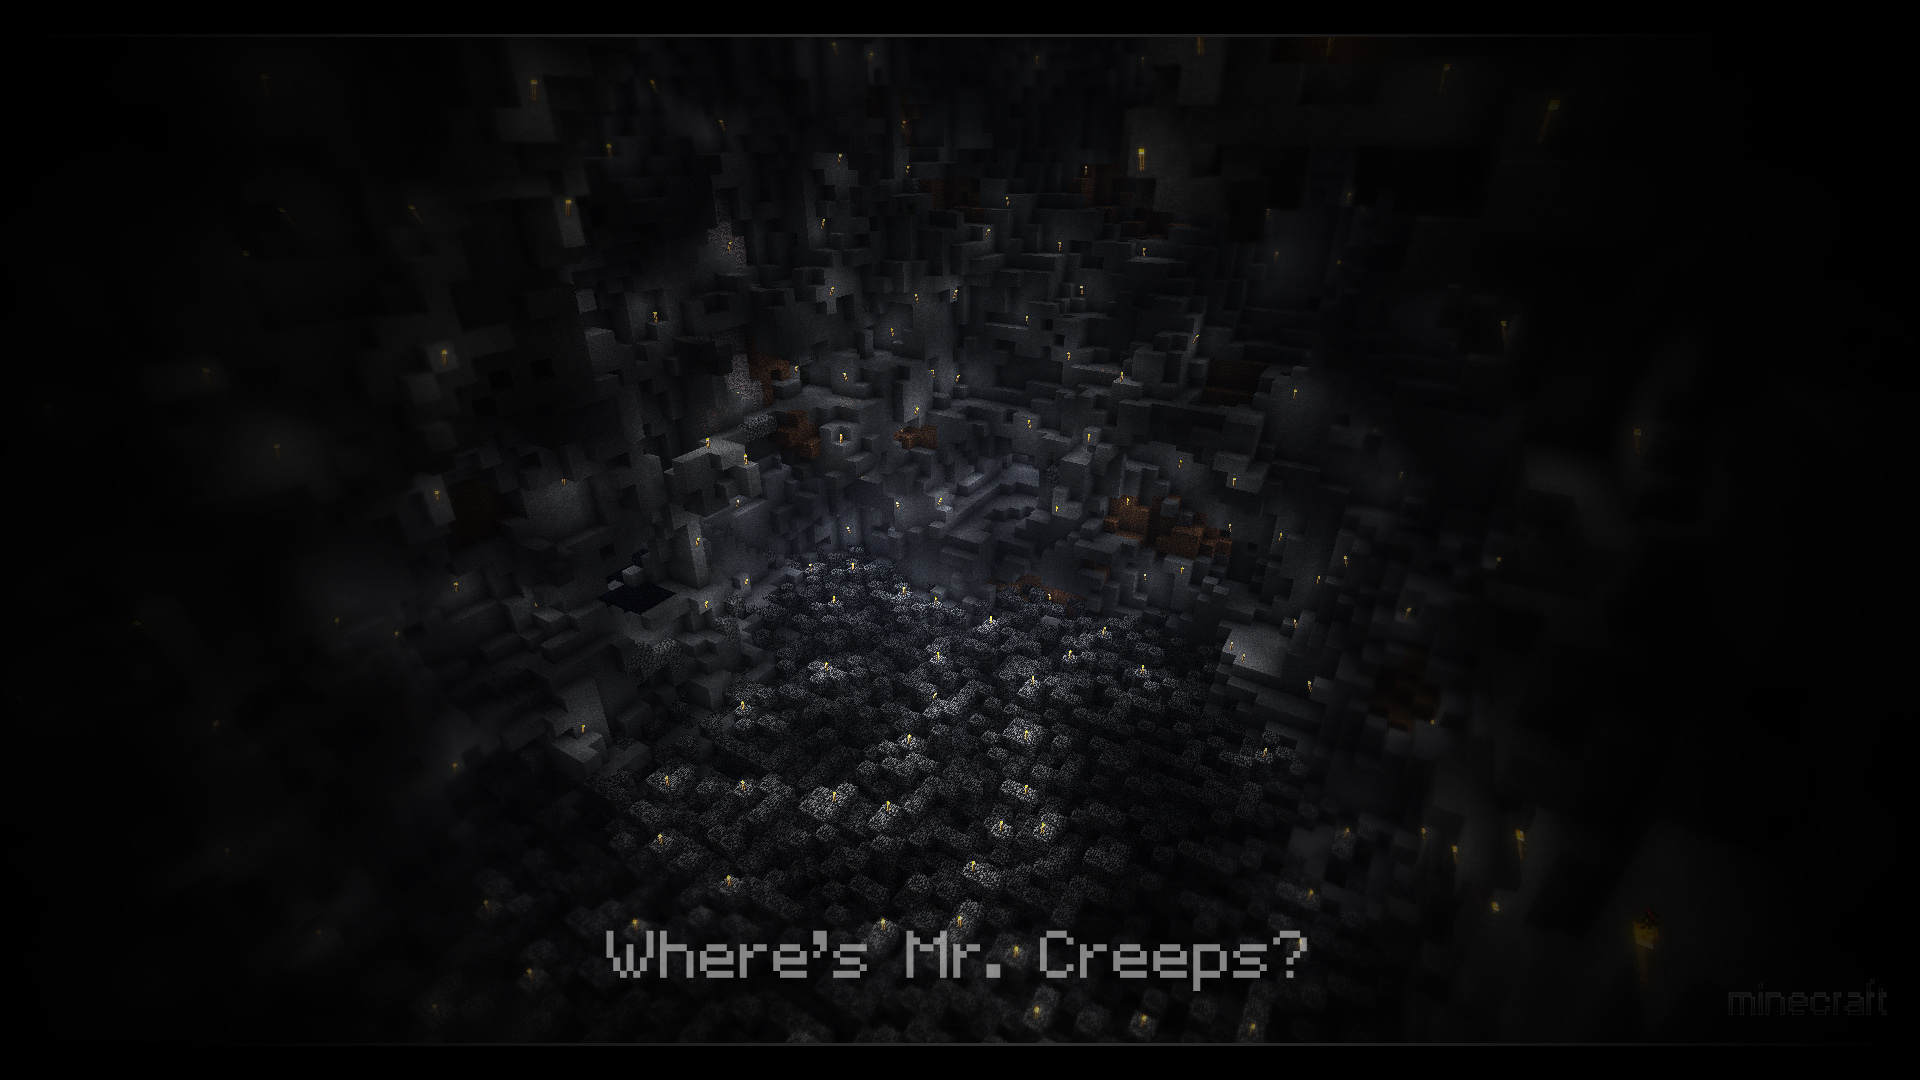 Mr Creeper Wallpaper Image